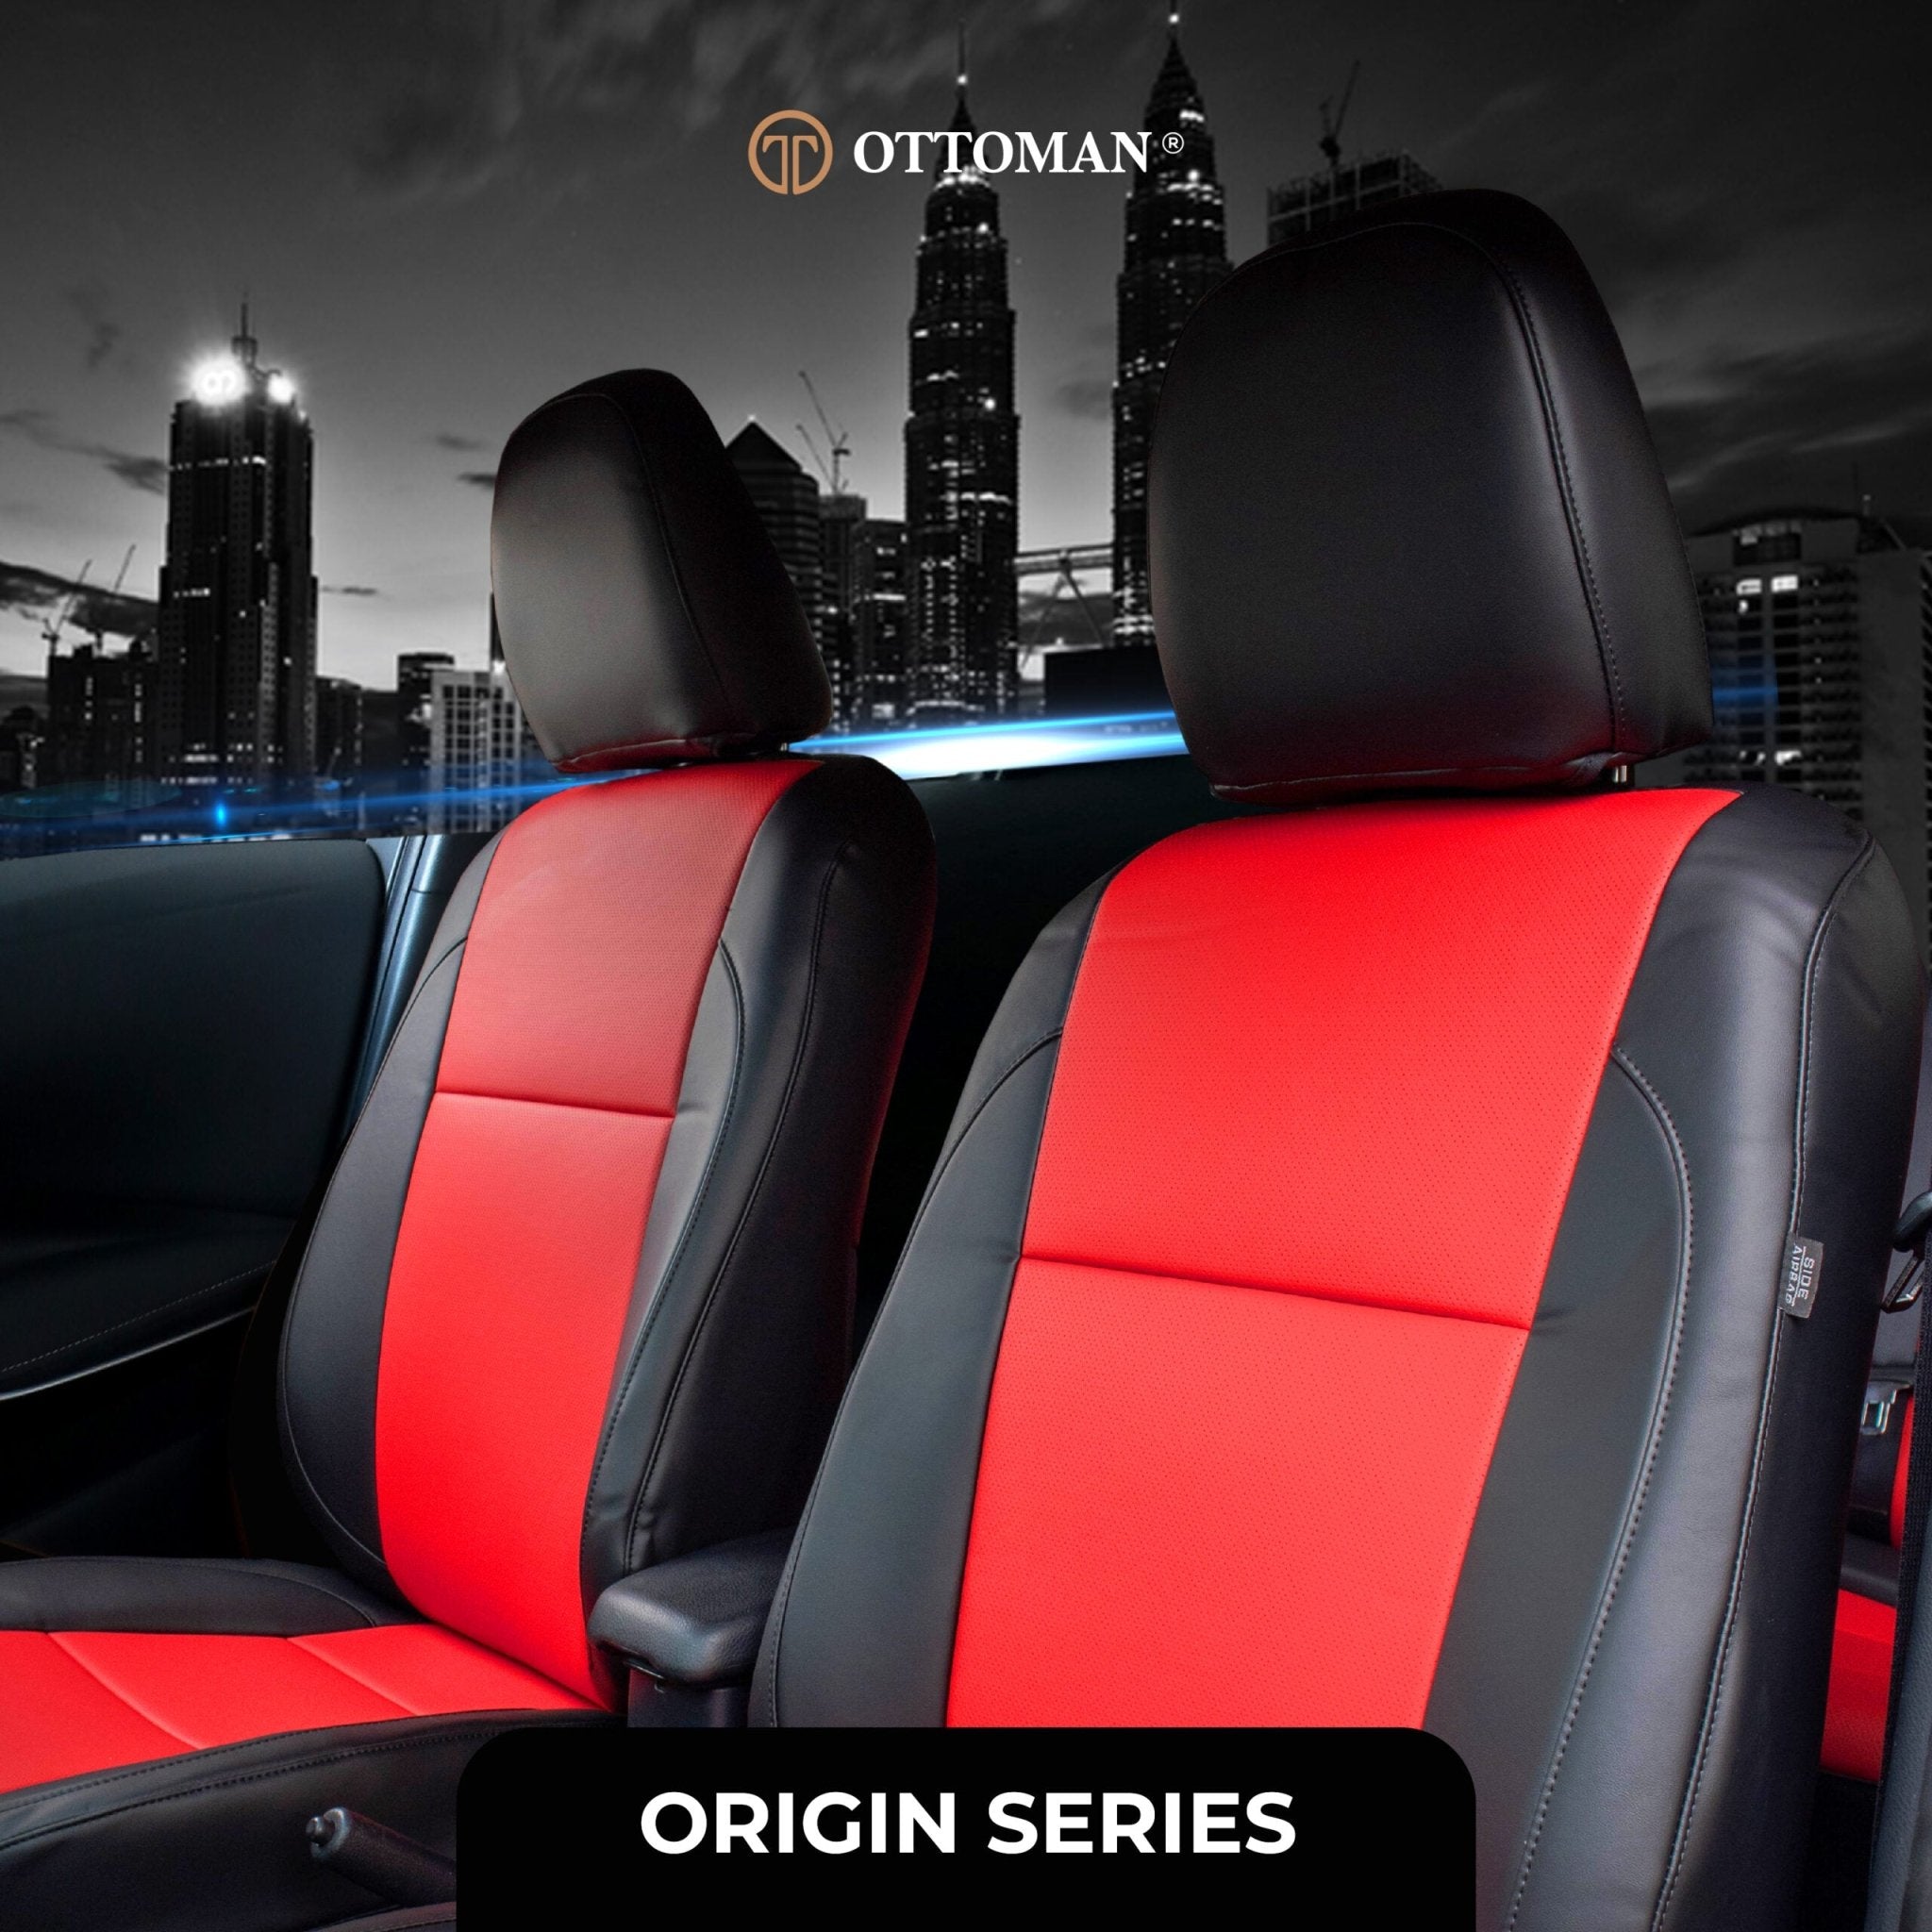 Proton Saga (2016-Present) Ottoman Seat Cover Seat Cover in Klang Selangor, Penang, Johor Bahru - Ottoman Car Mats